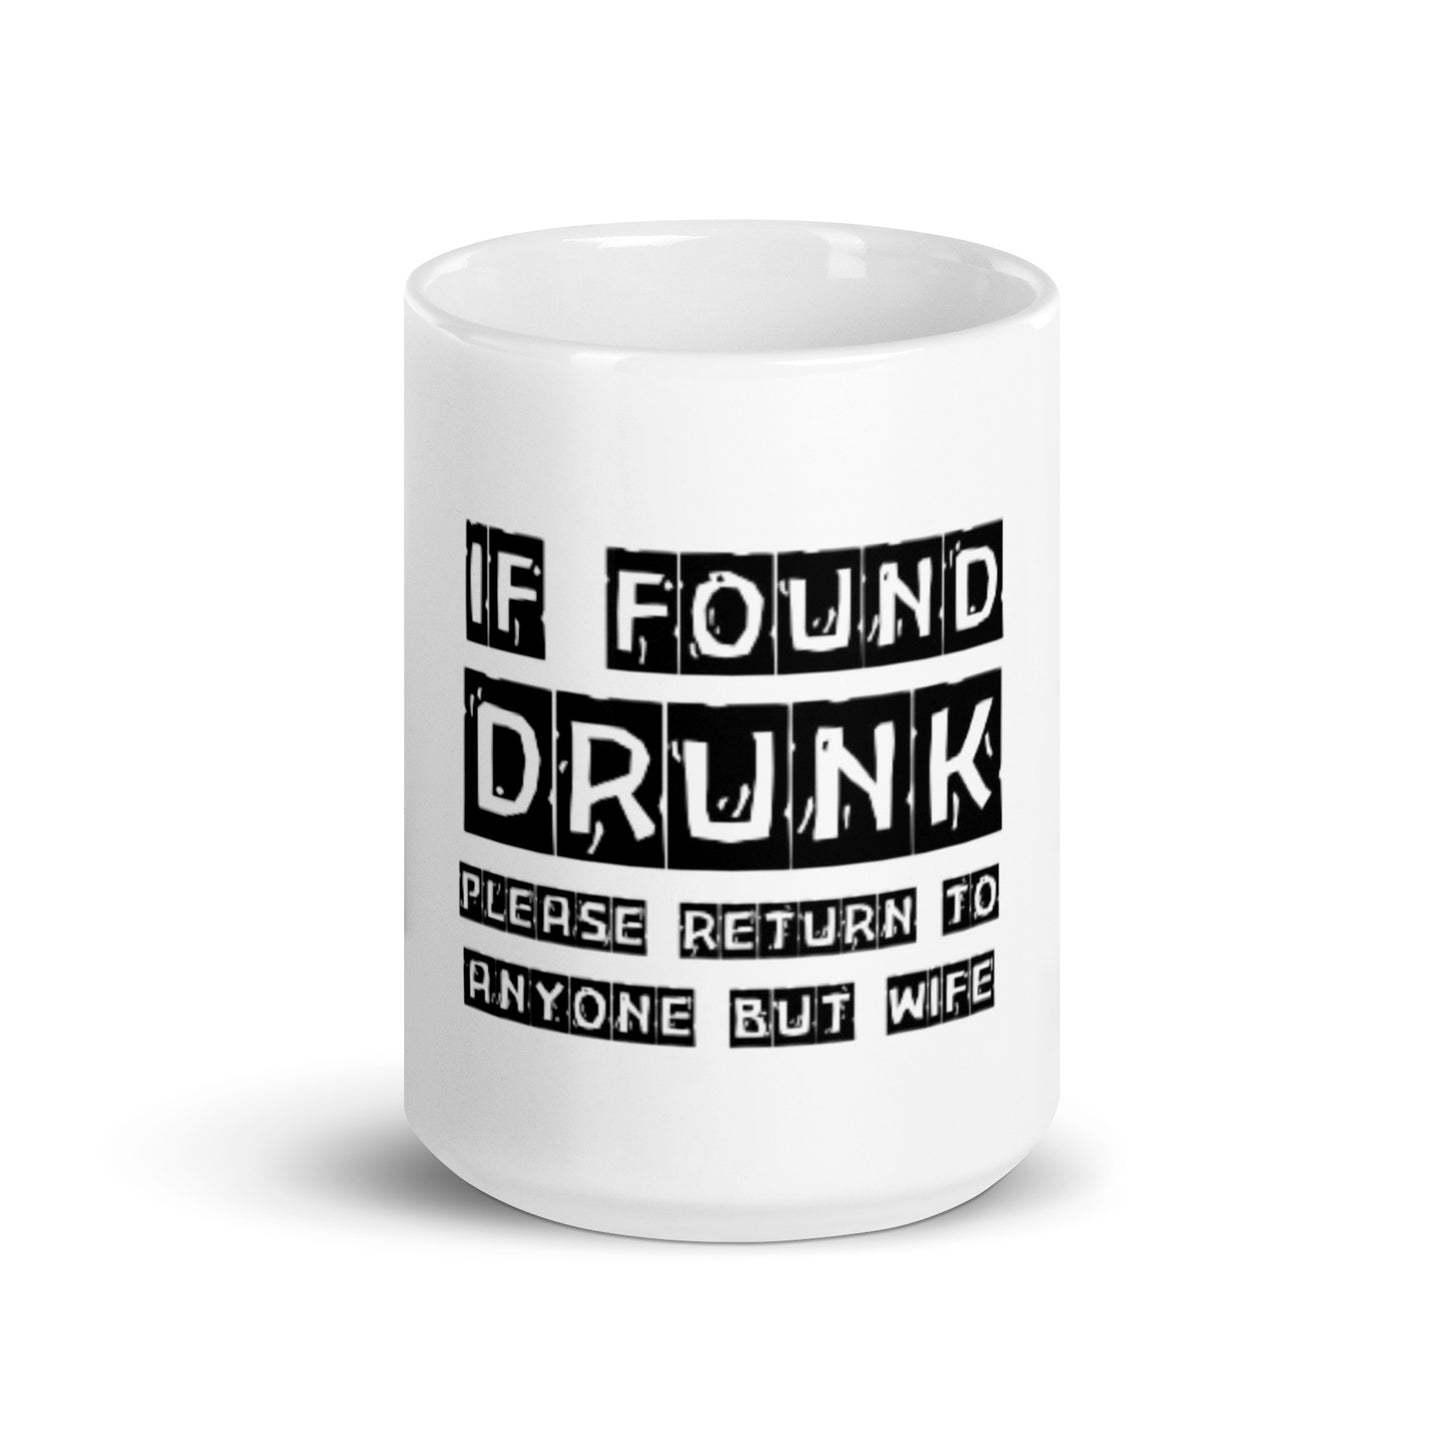 If Found Drunk mug